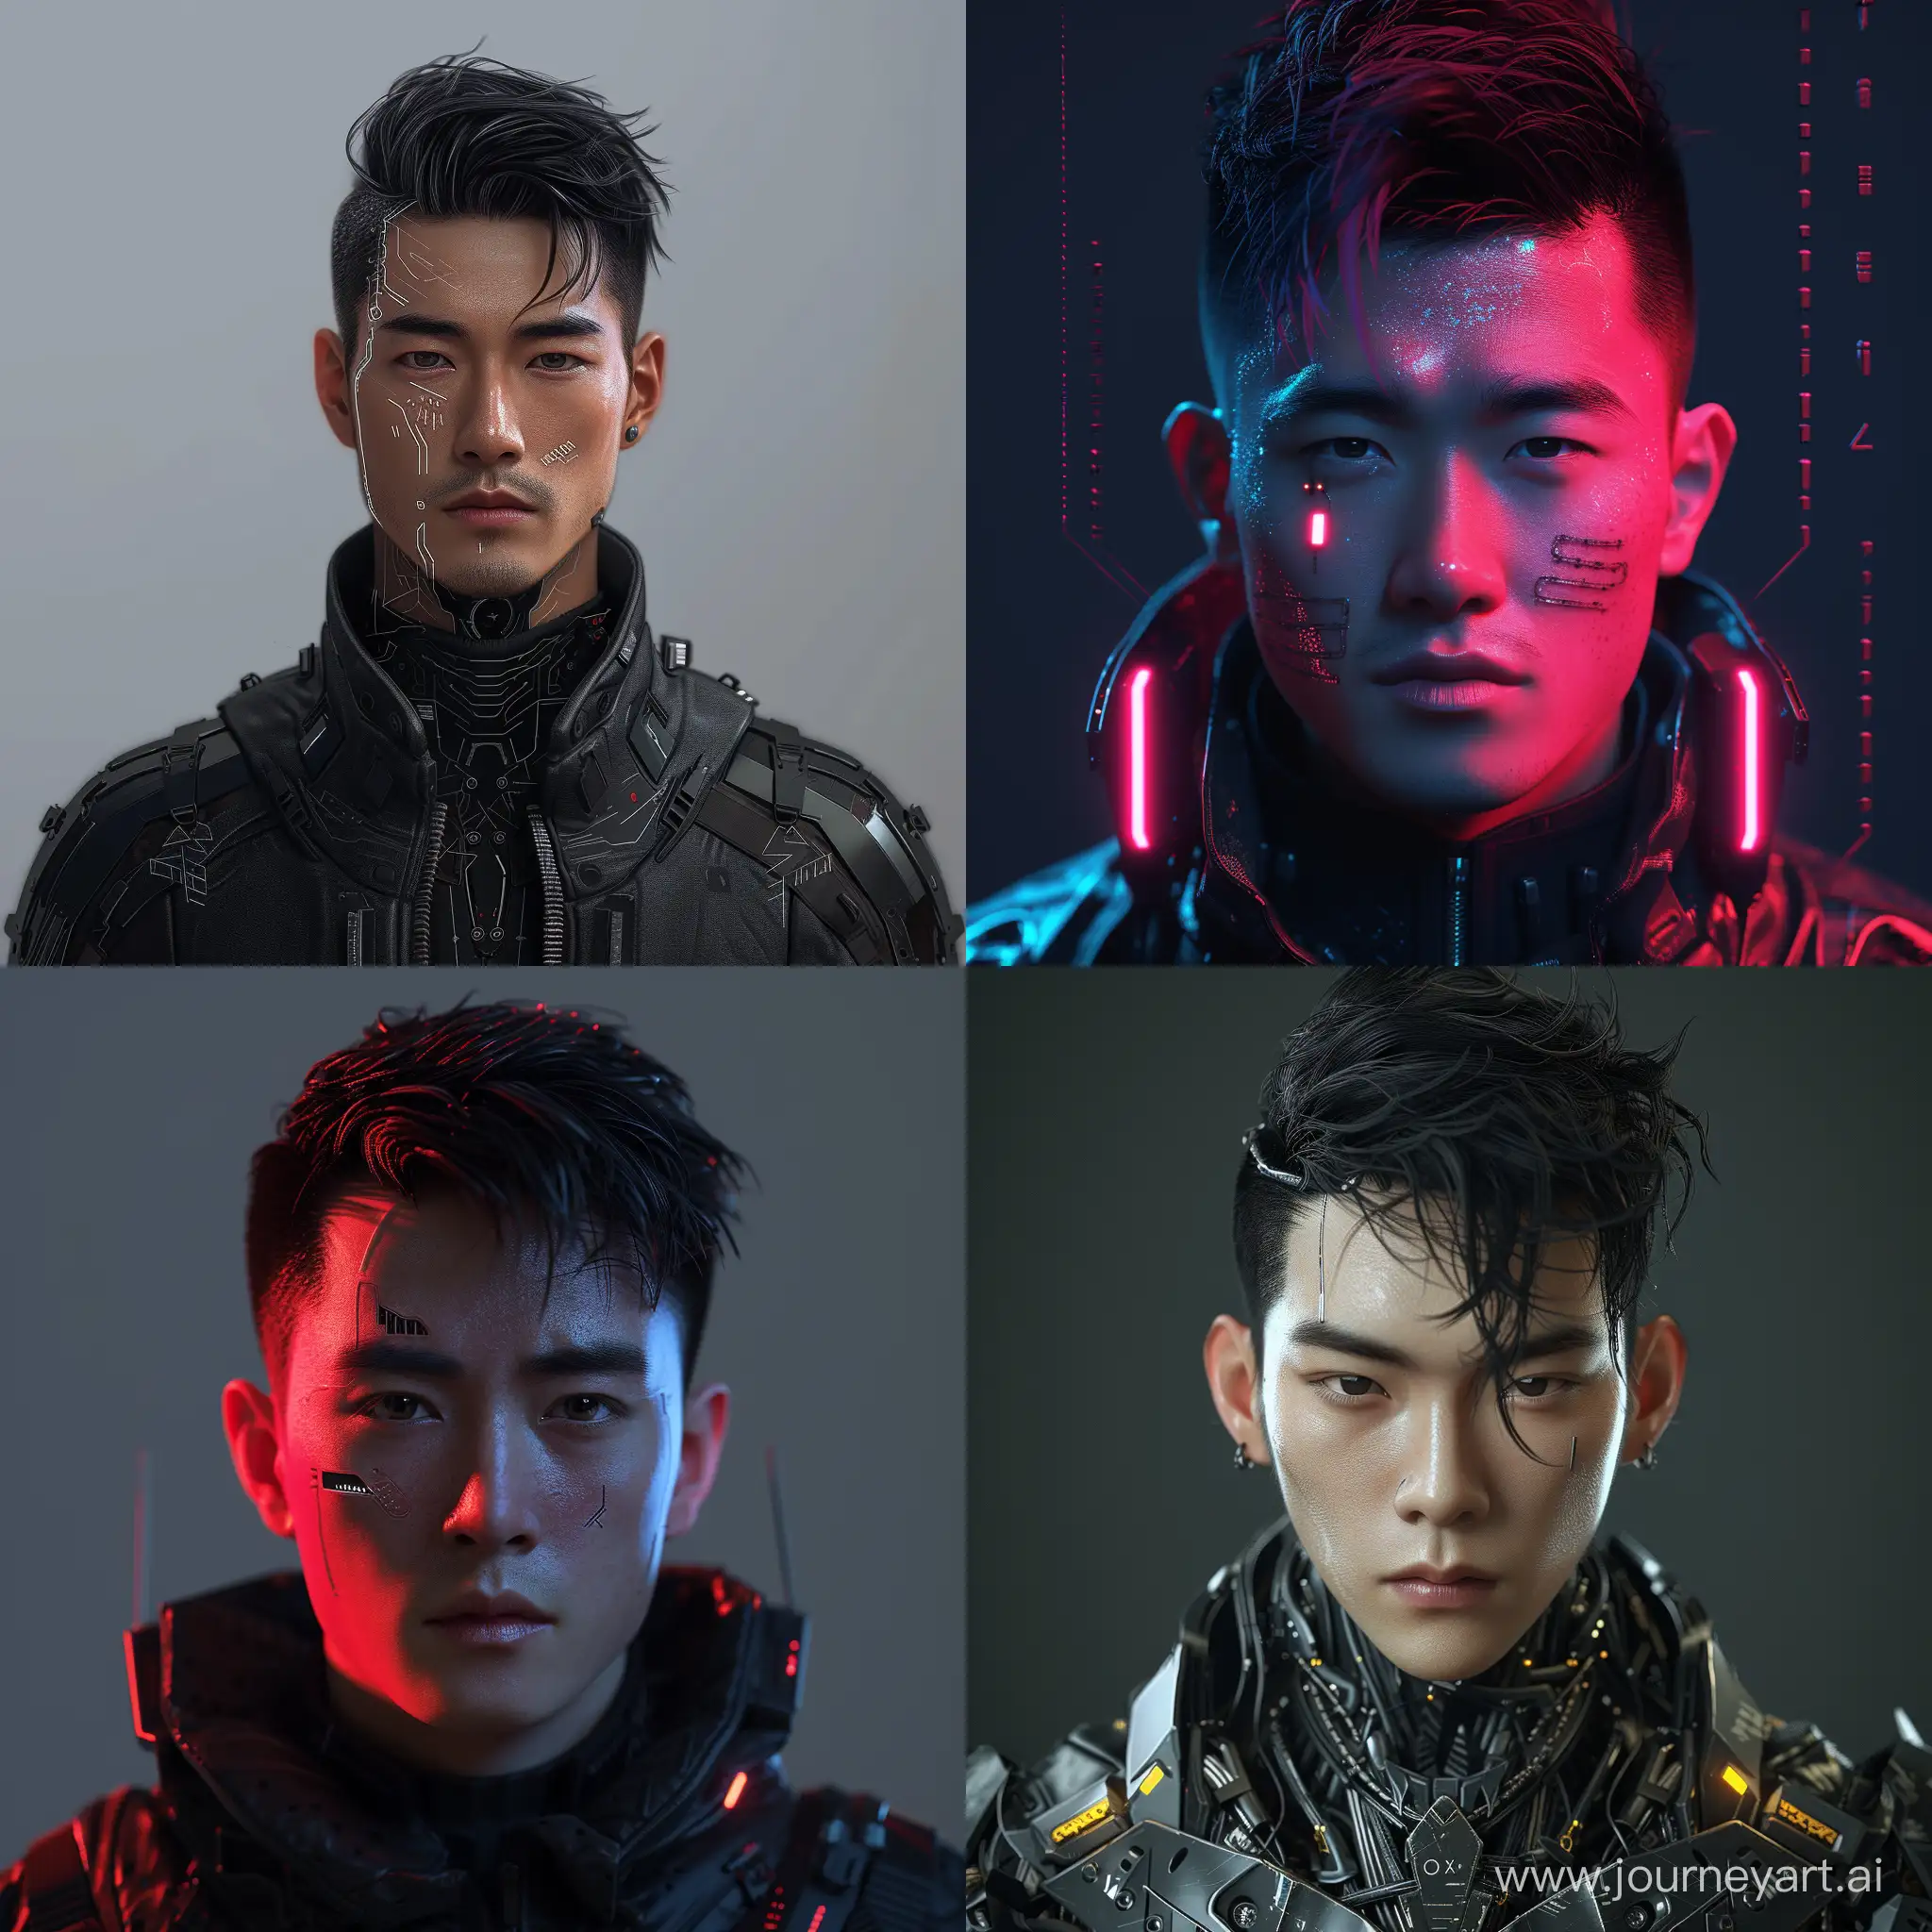 Futuristic-Cyberpunk-Asian-Male-Avatar-with-CuttingEdge-Style